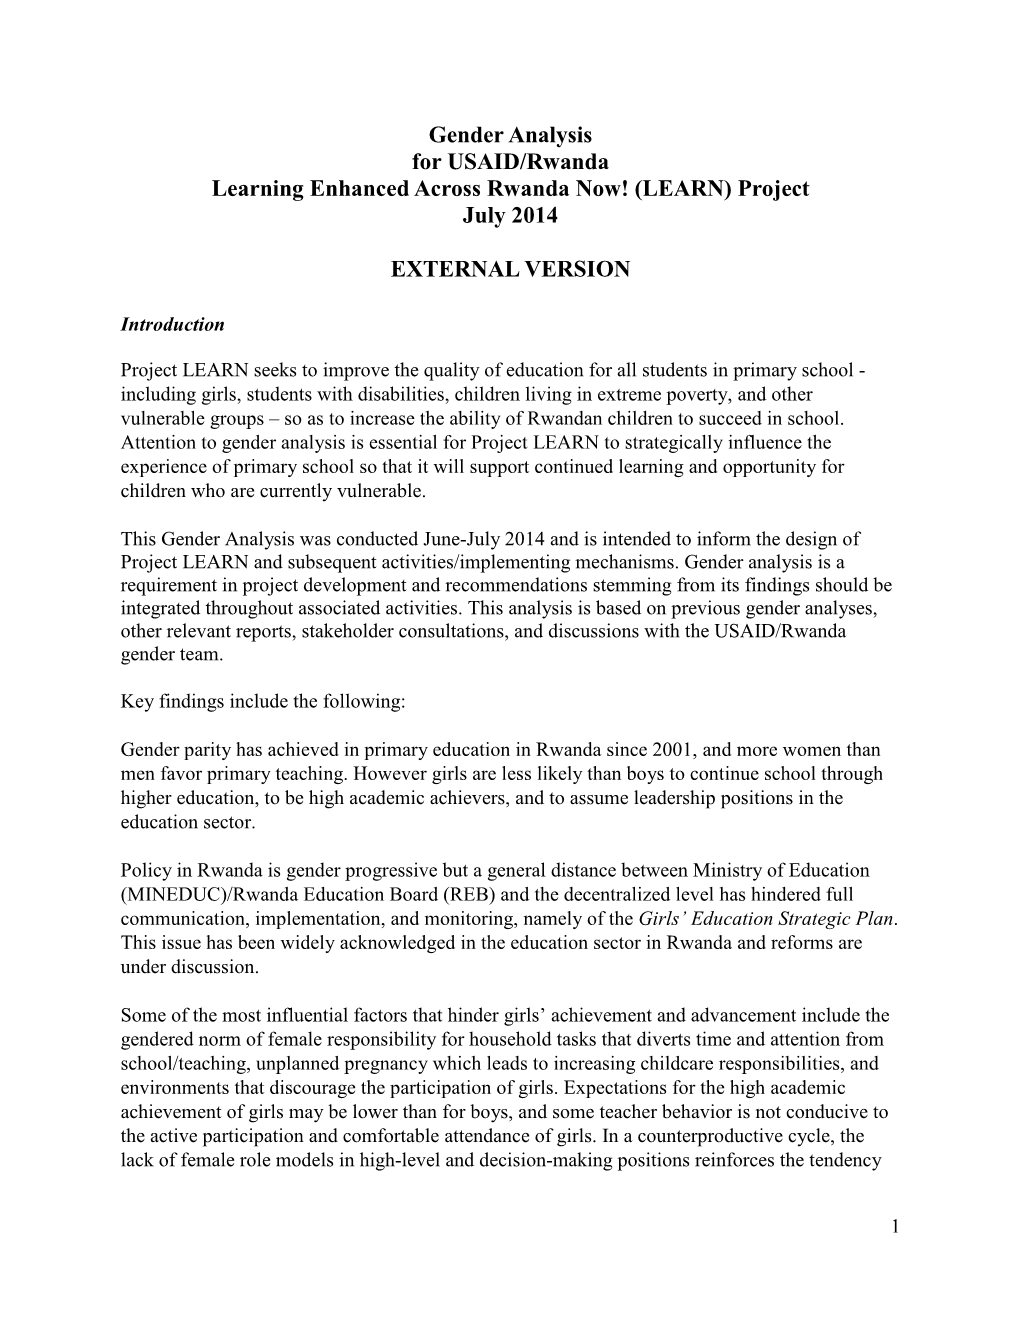 Gender Analysis for USAID/Rwanda Learning Enhanced Across Rwanda Now! (LEARN) Project July 2014 EXTERNAL VERSION